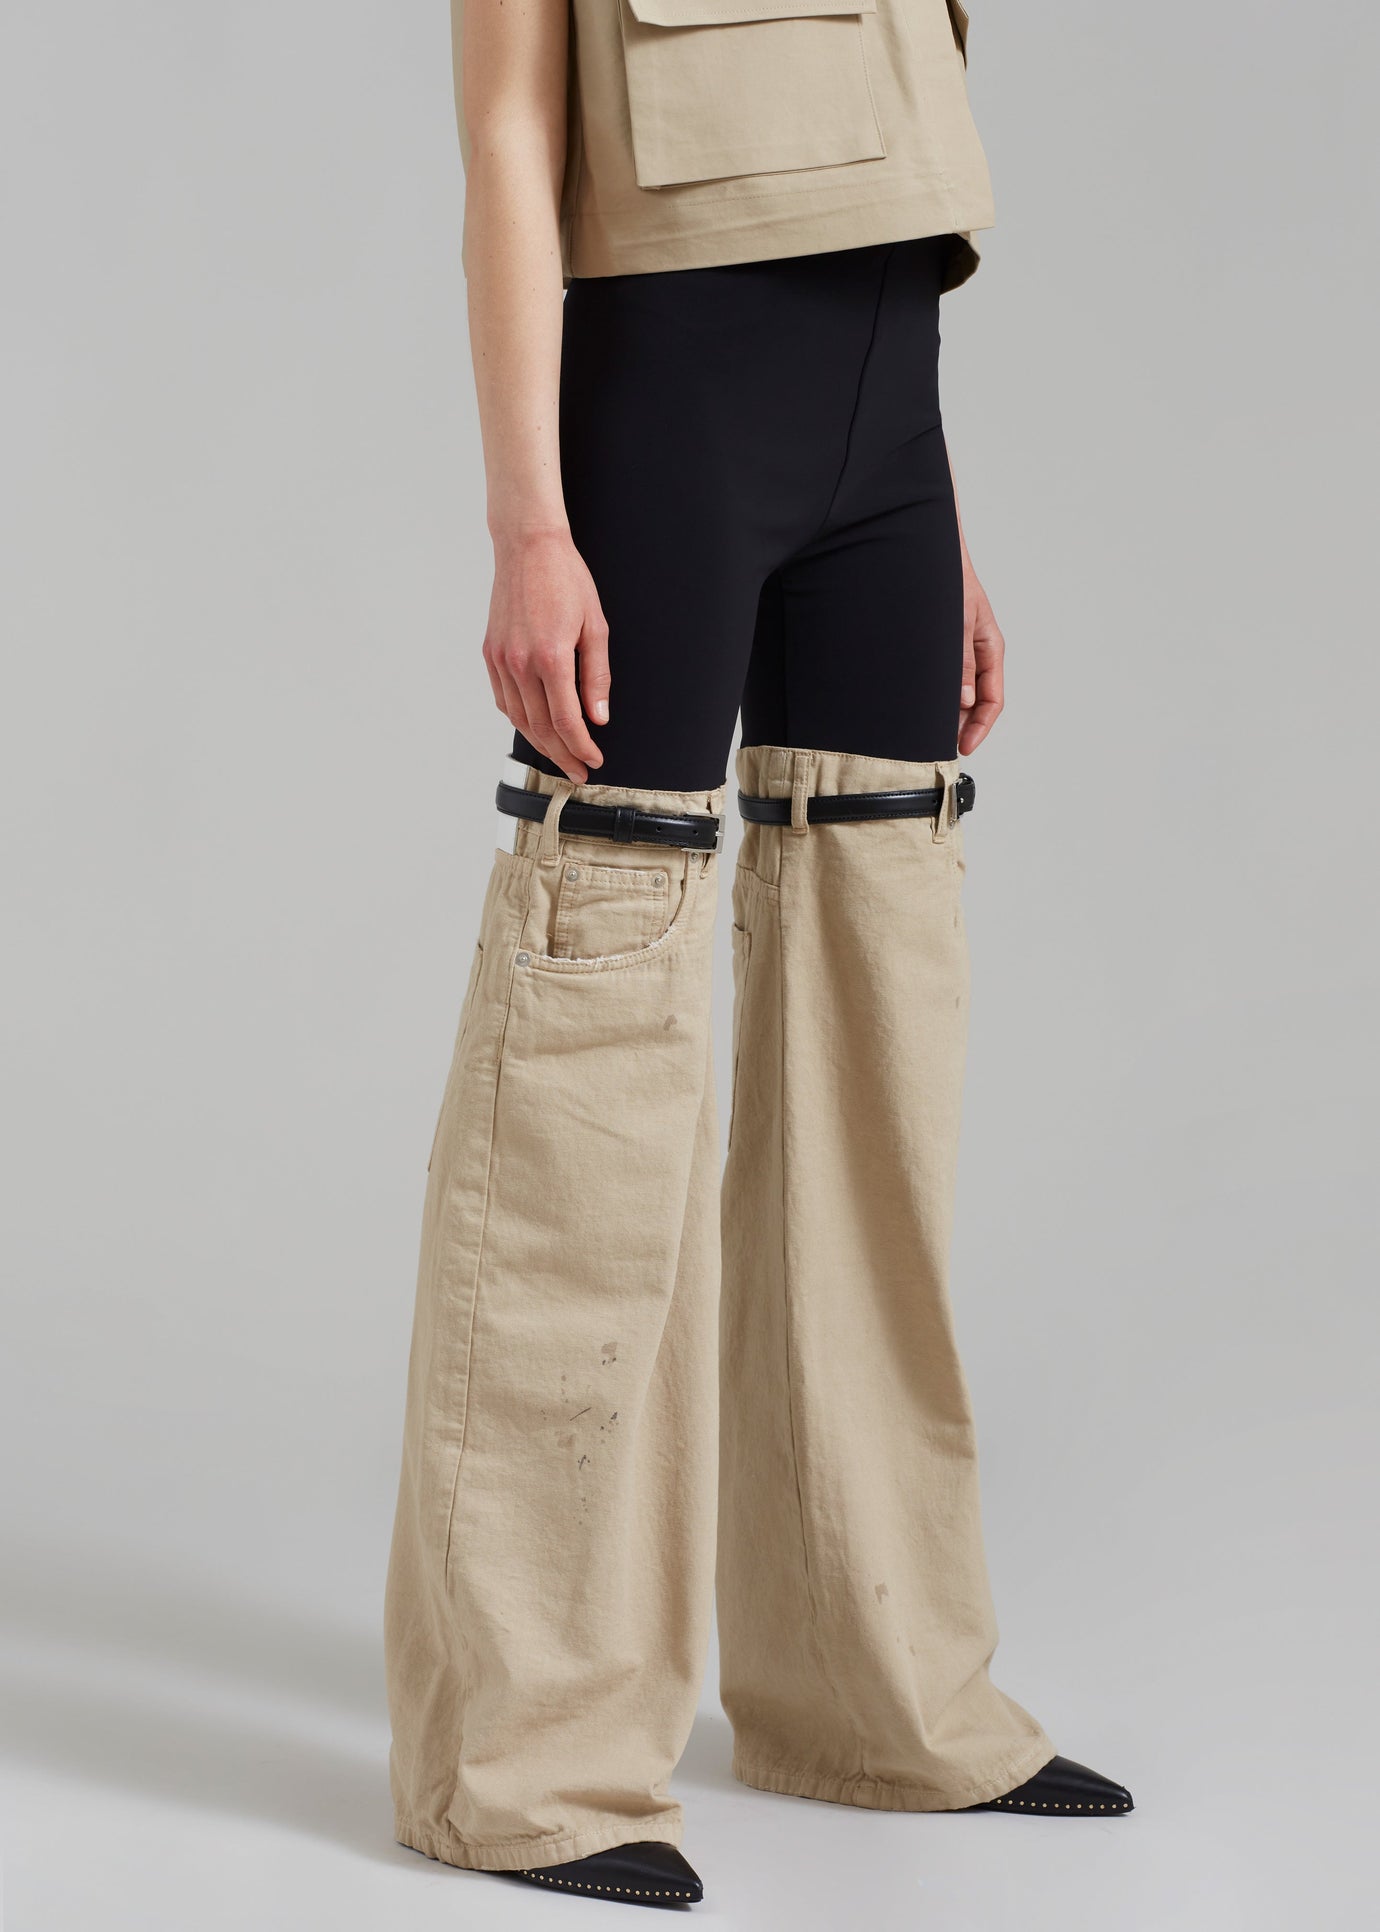 Coperni Hybrid Denim Trousers - Black/Beige - 1